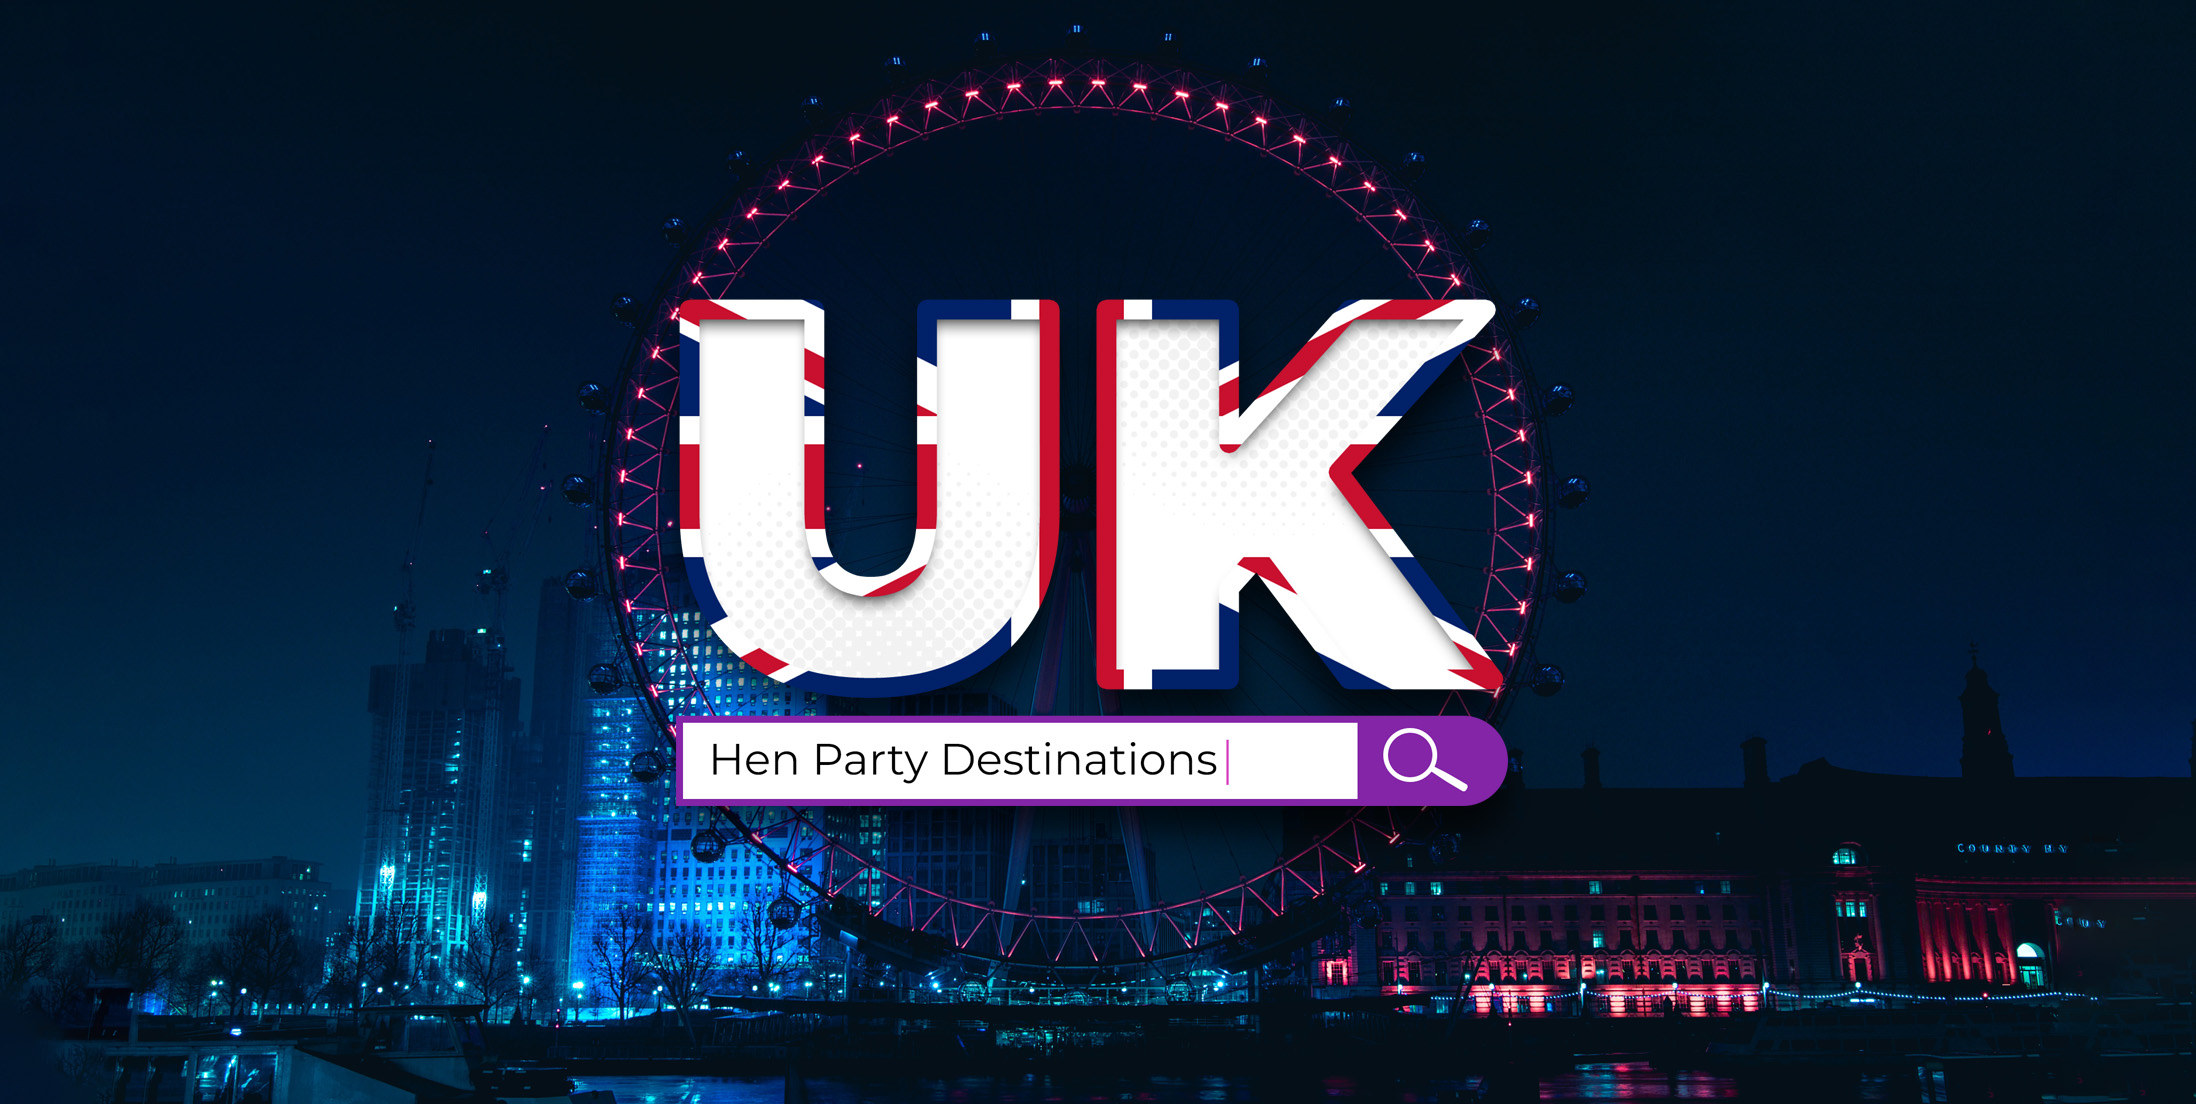 UK Hen Party Destinations